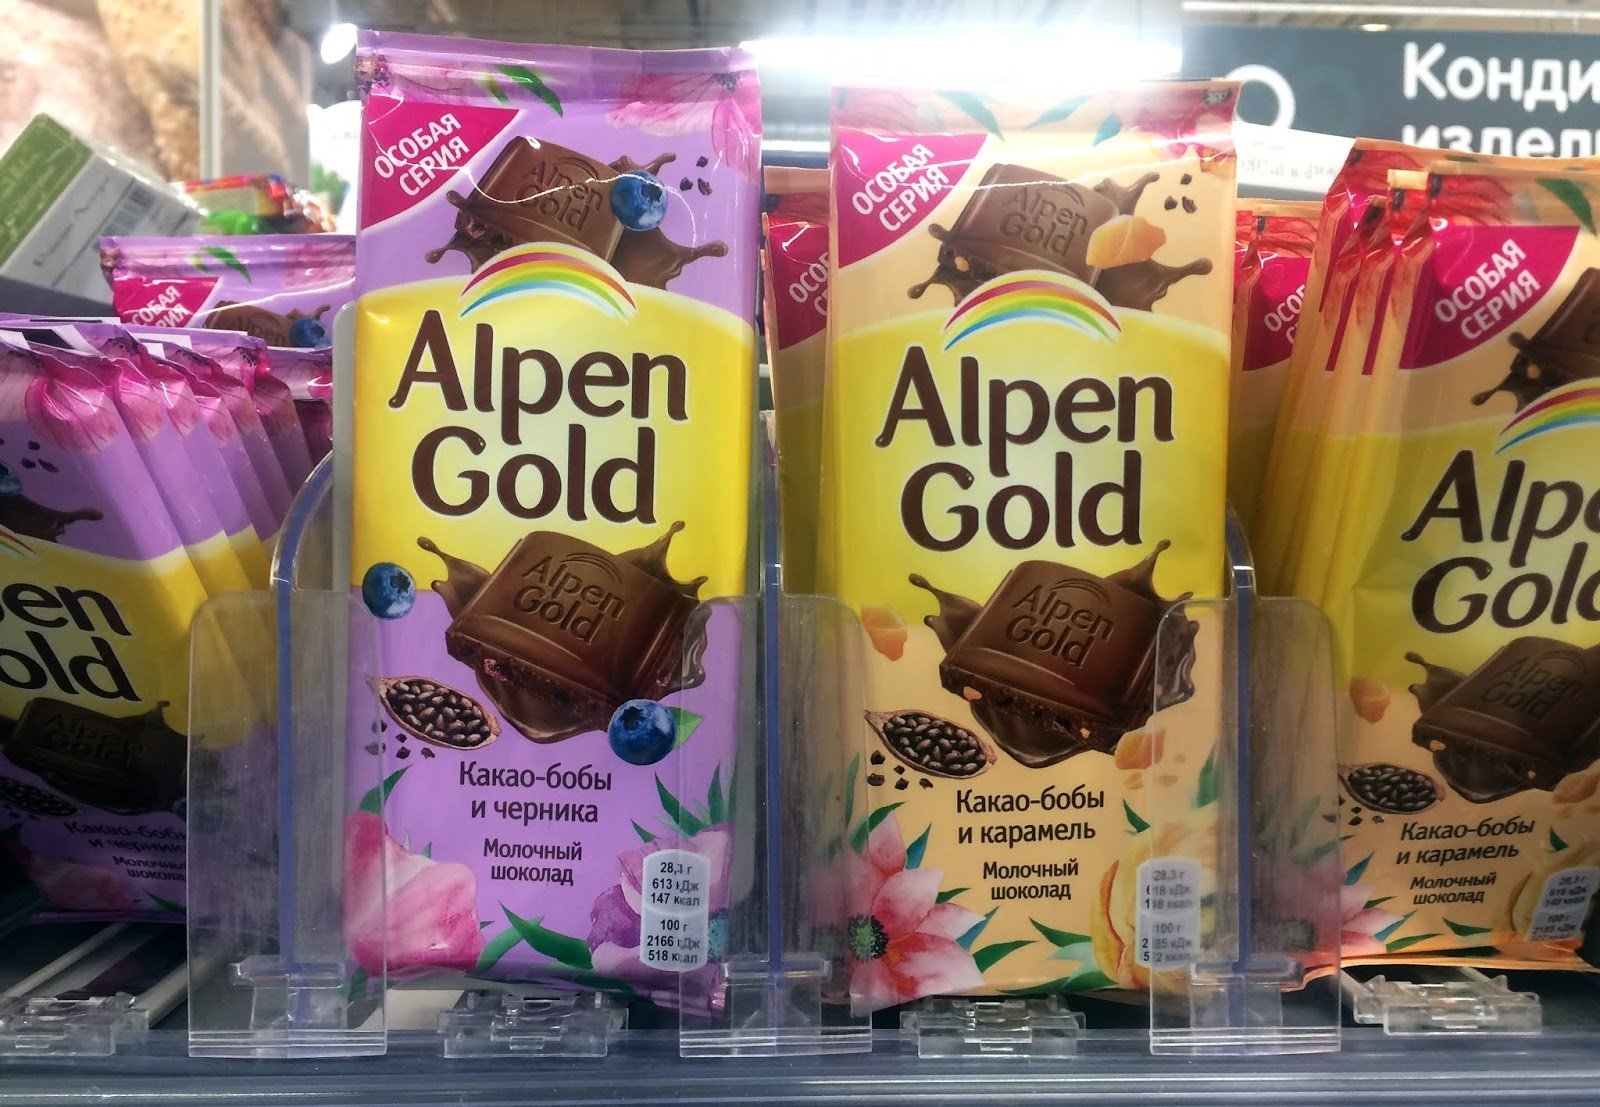 Анпенгольд шоколад. Вкусы шоколада Альпен Гольд. Шоколад Альпен Гольд. Вкусы Алпен Альпен Гольд. Шоколадки Альпен Гольд вкусы.